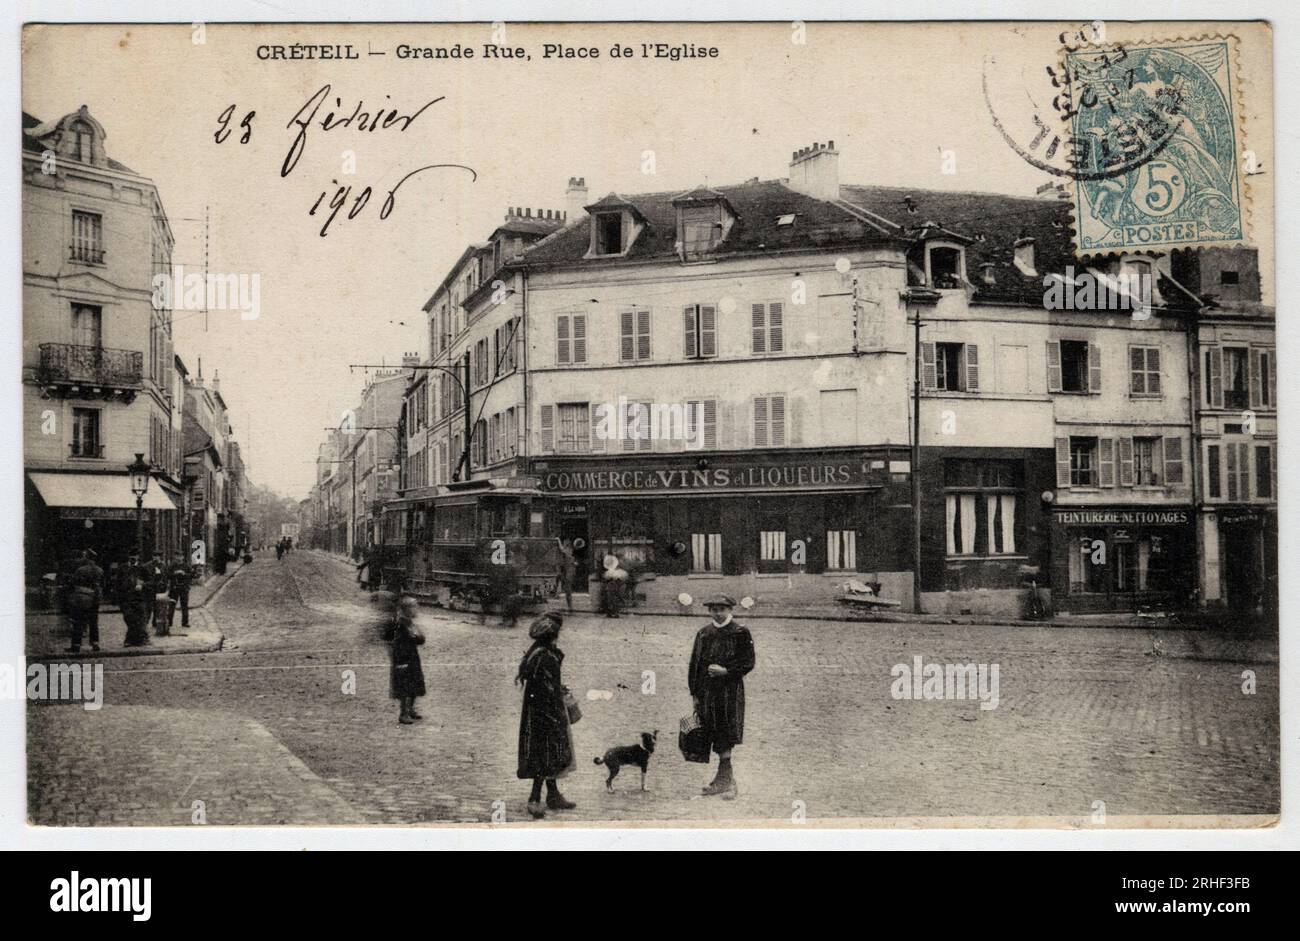 Ile de France, Val de Marne, Creteil : Grande Rue, Place de l'Eglise - Carte postale datee 1906 Stock Photo